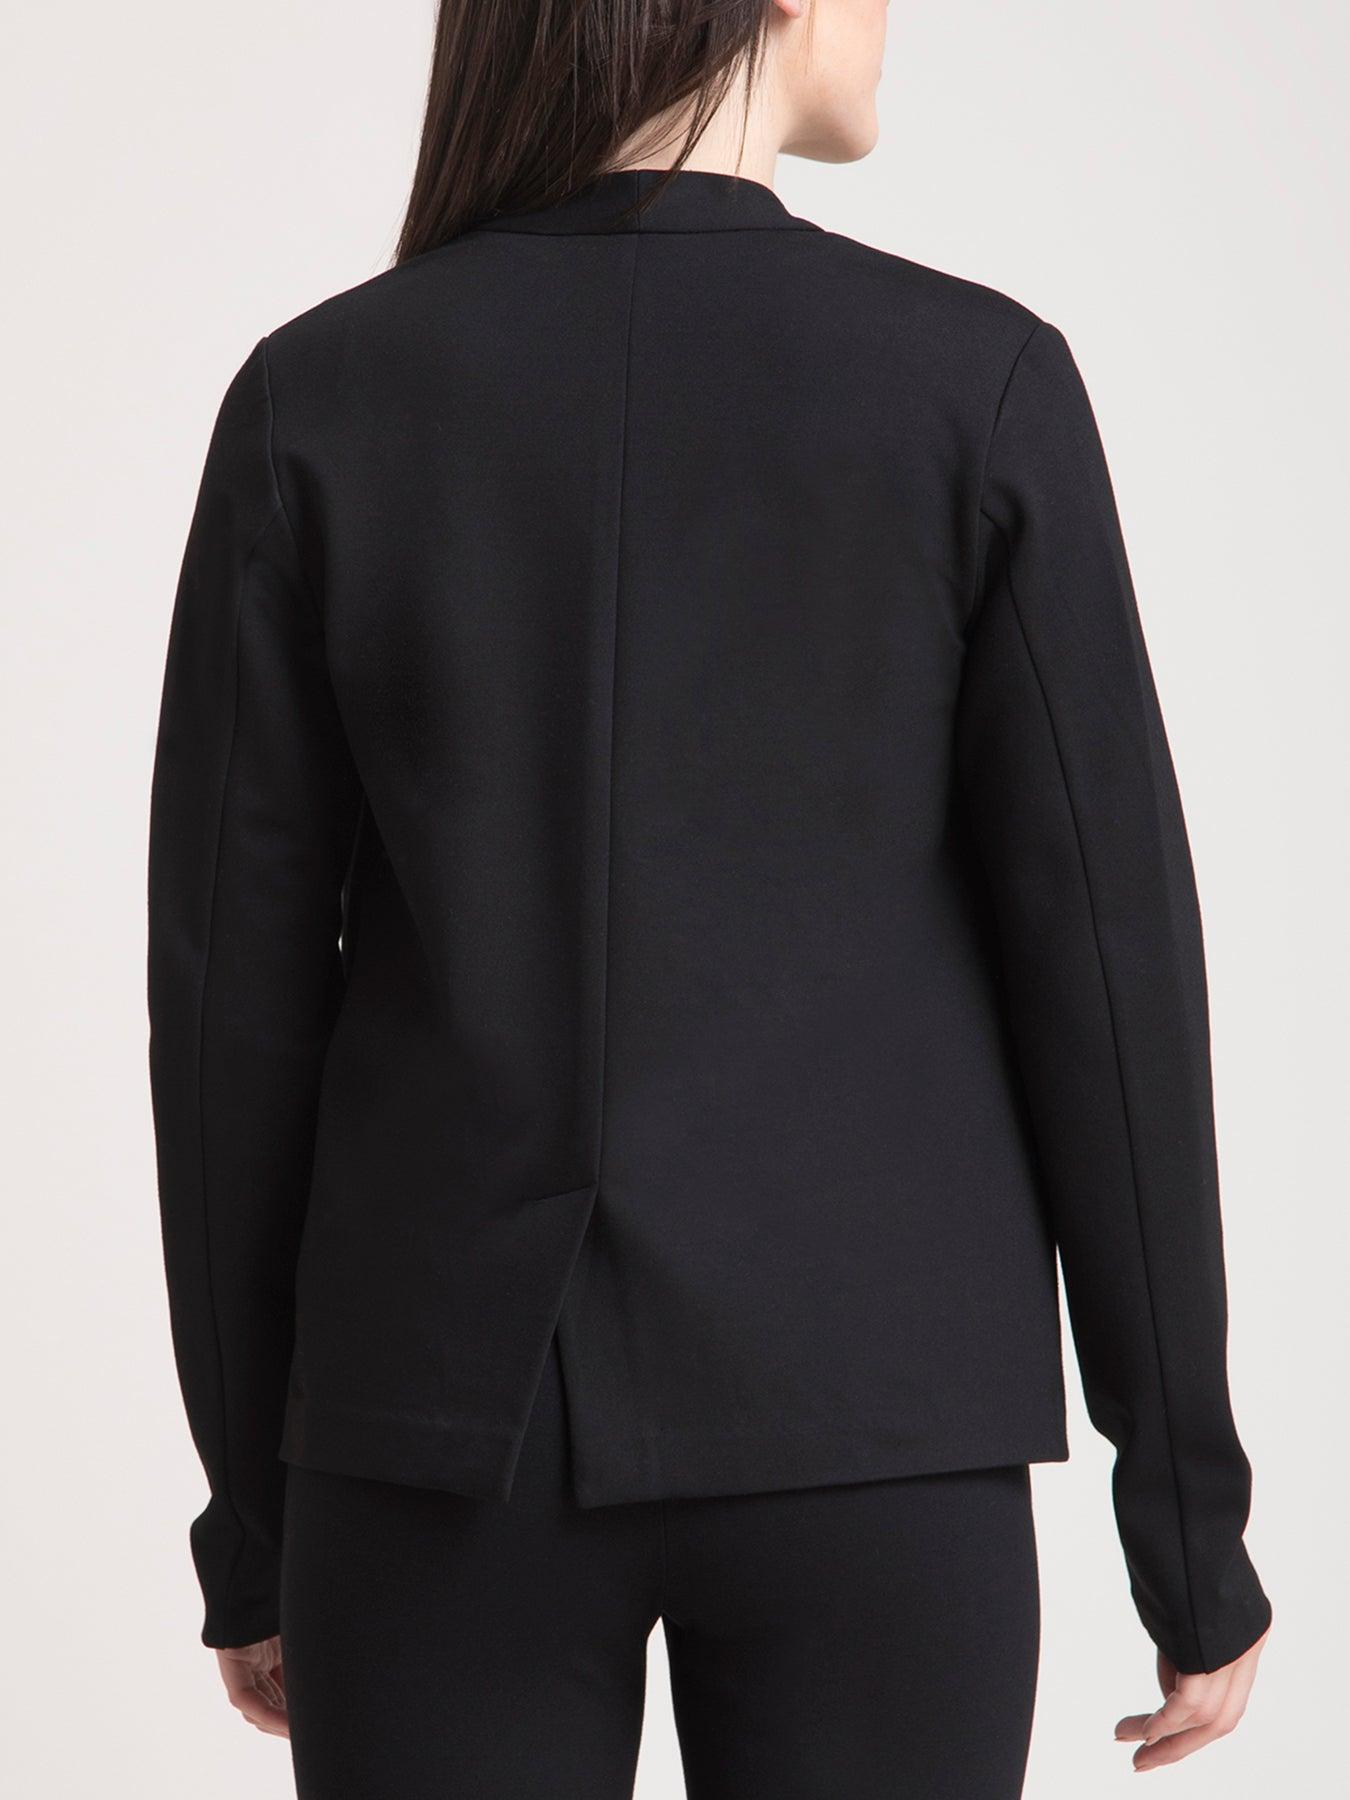 4 Way Stretch LivIn Jacket - Black| Formal Jackets